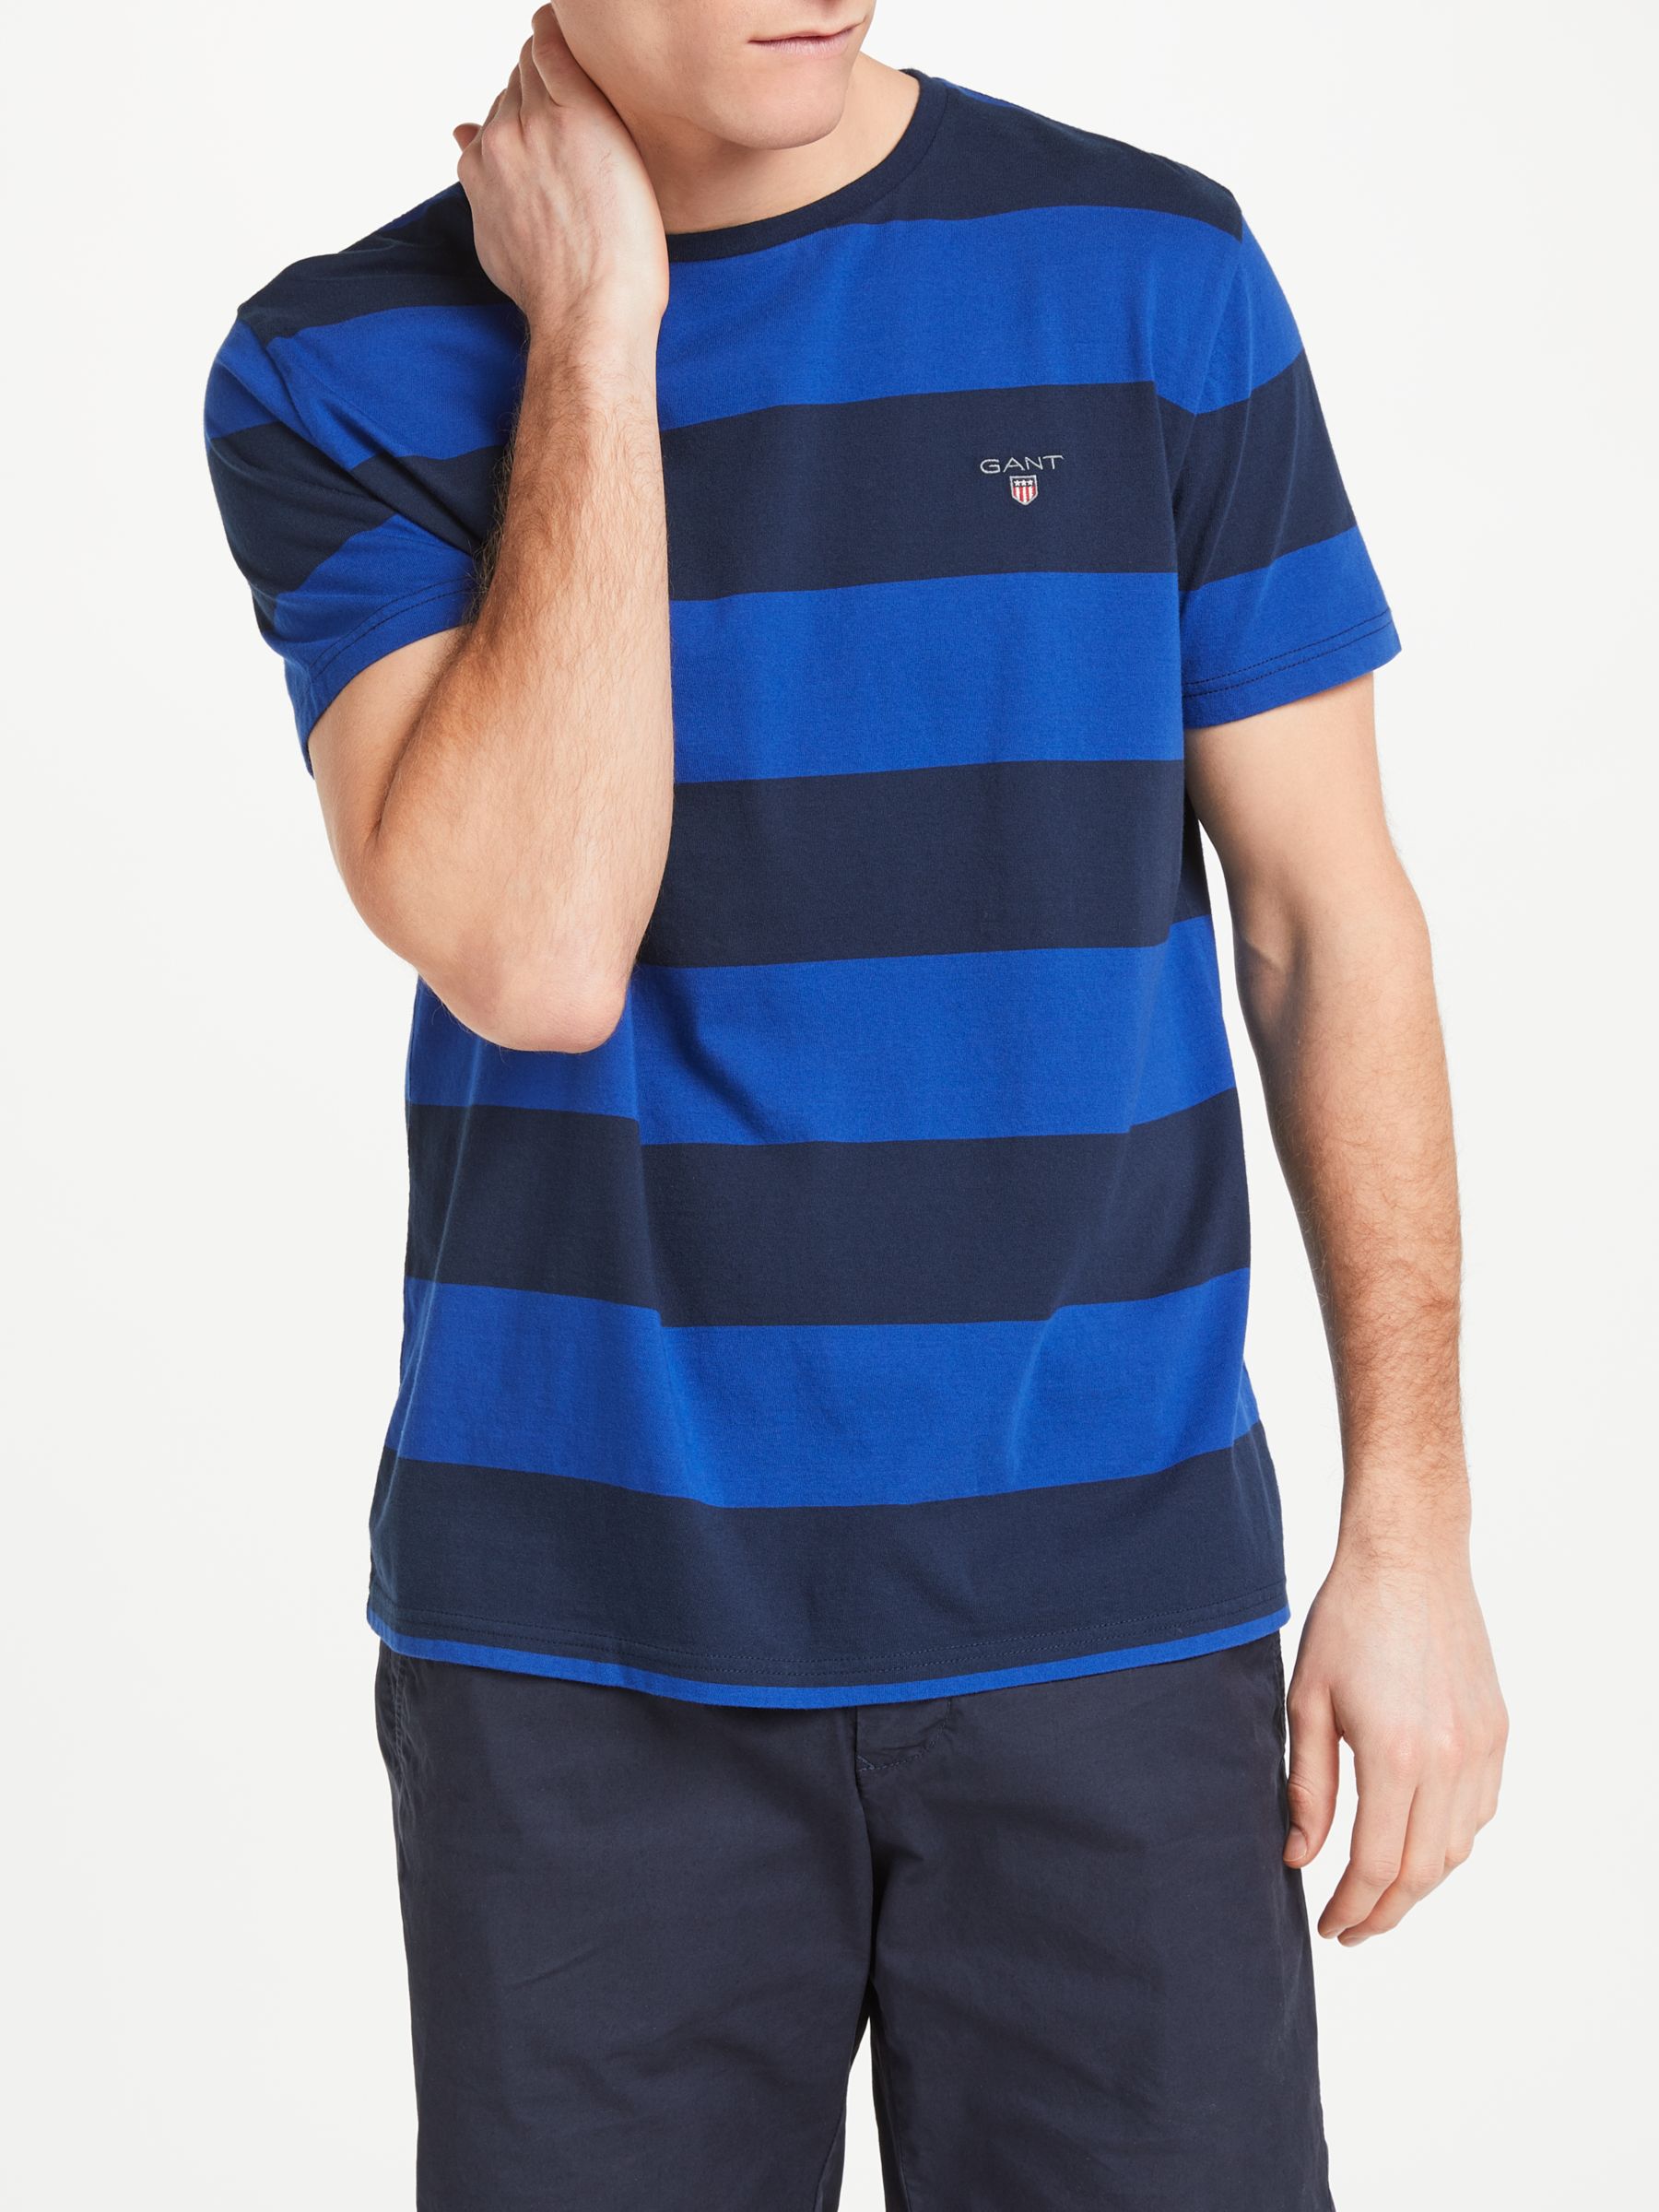 GANT Original Barstripe Cotton T-Shirt, Blue, S